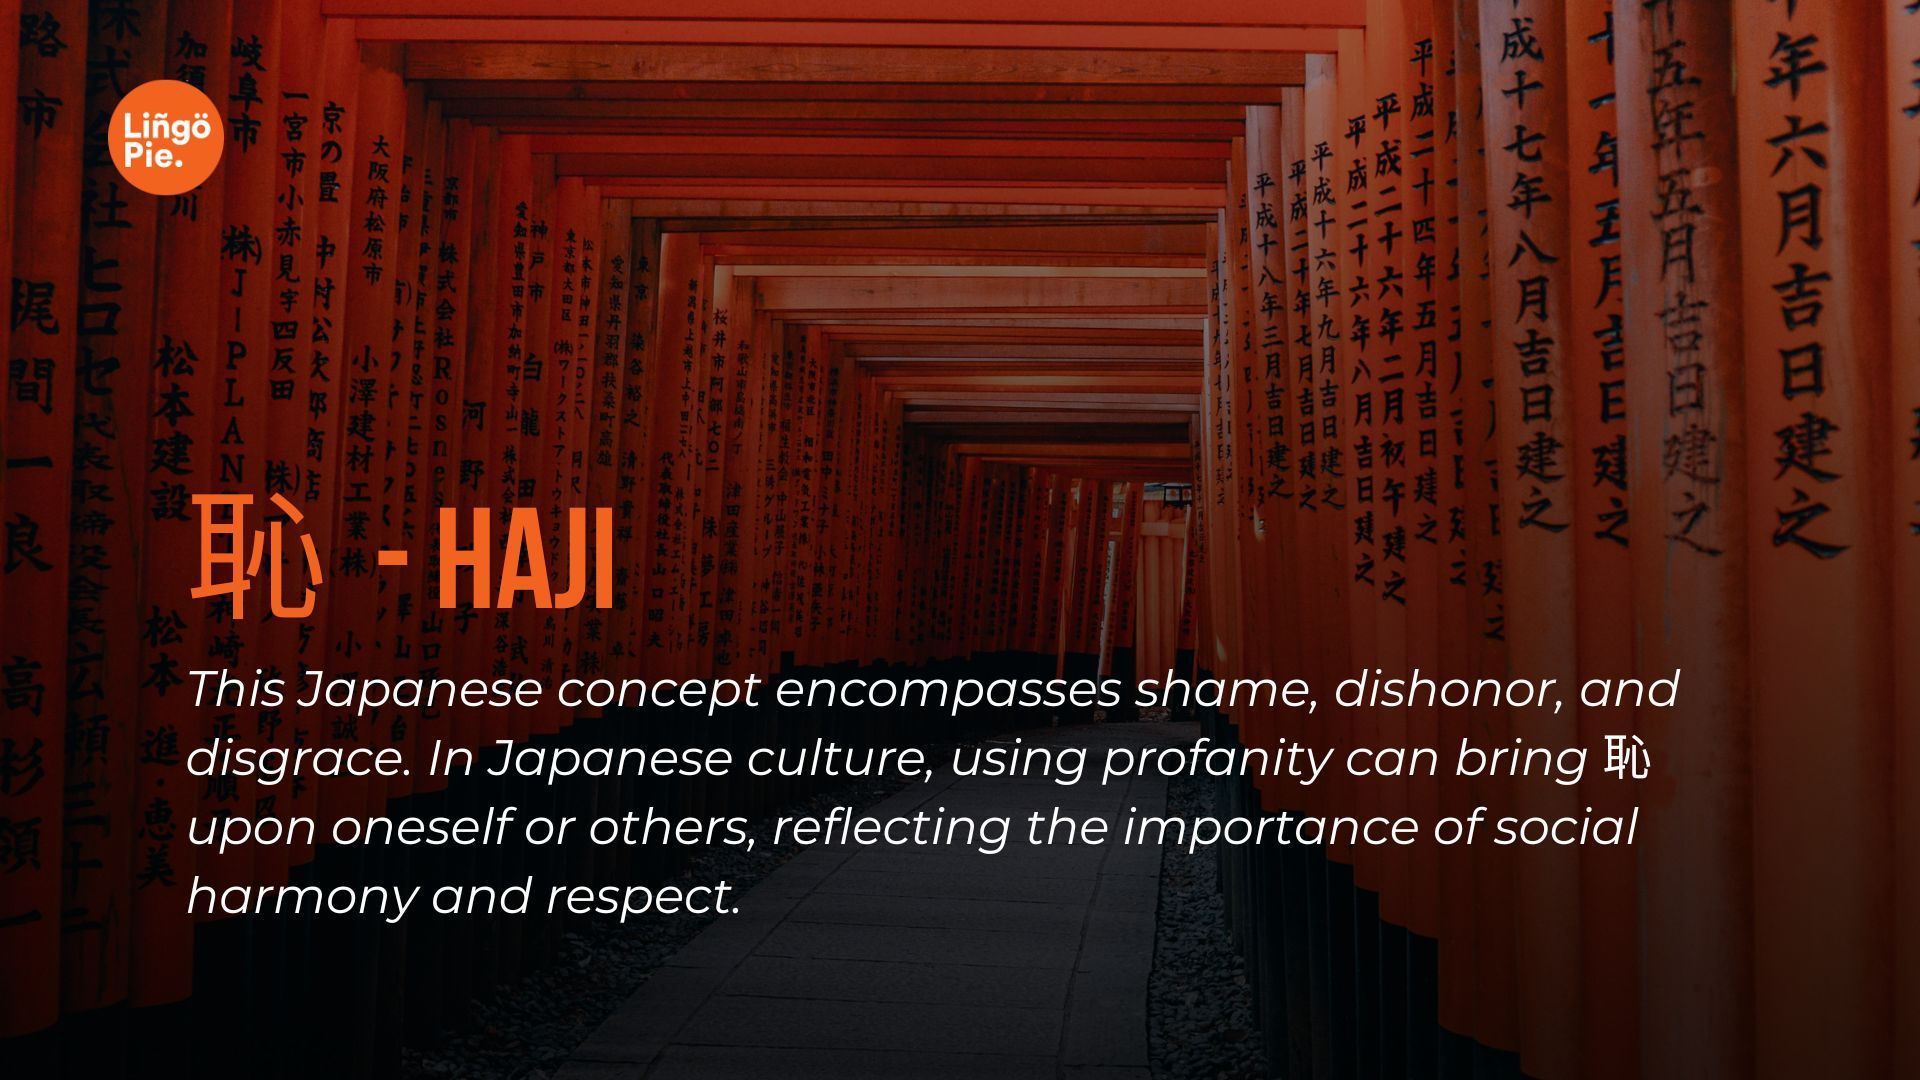 Japanese Culture - Haji or shame